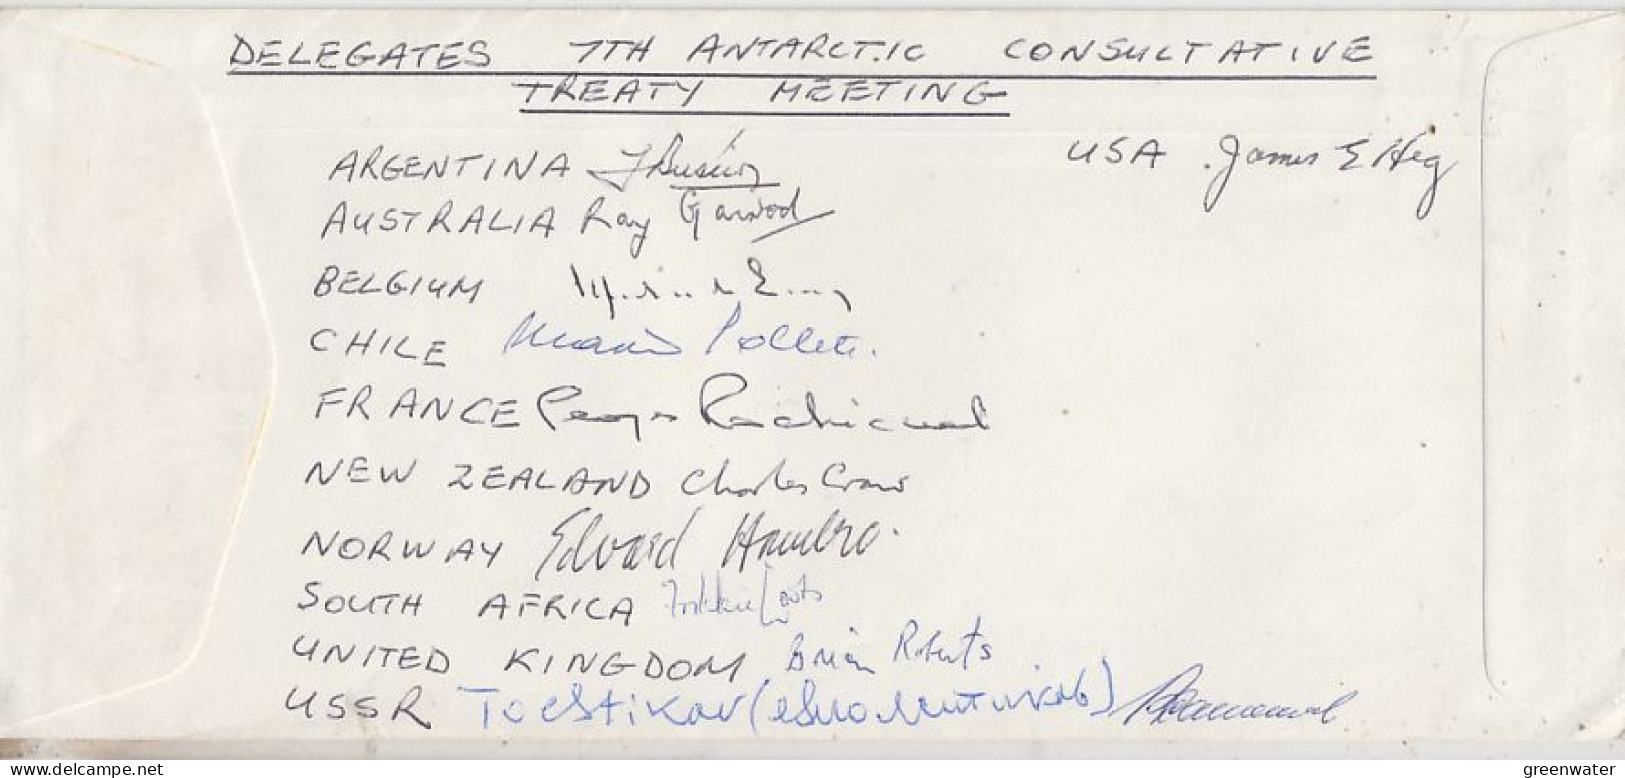 Ross Dependency "Delegates 7th. Antarctic Consultatie Treaty Meeting Wellington 1972 Ca Scott Base  20 NOV 1972 (RO206) - Briefe U. Dokumente